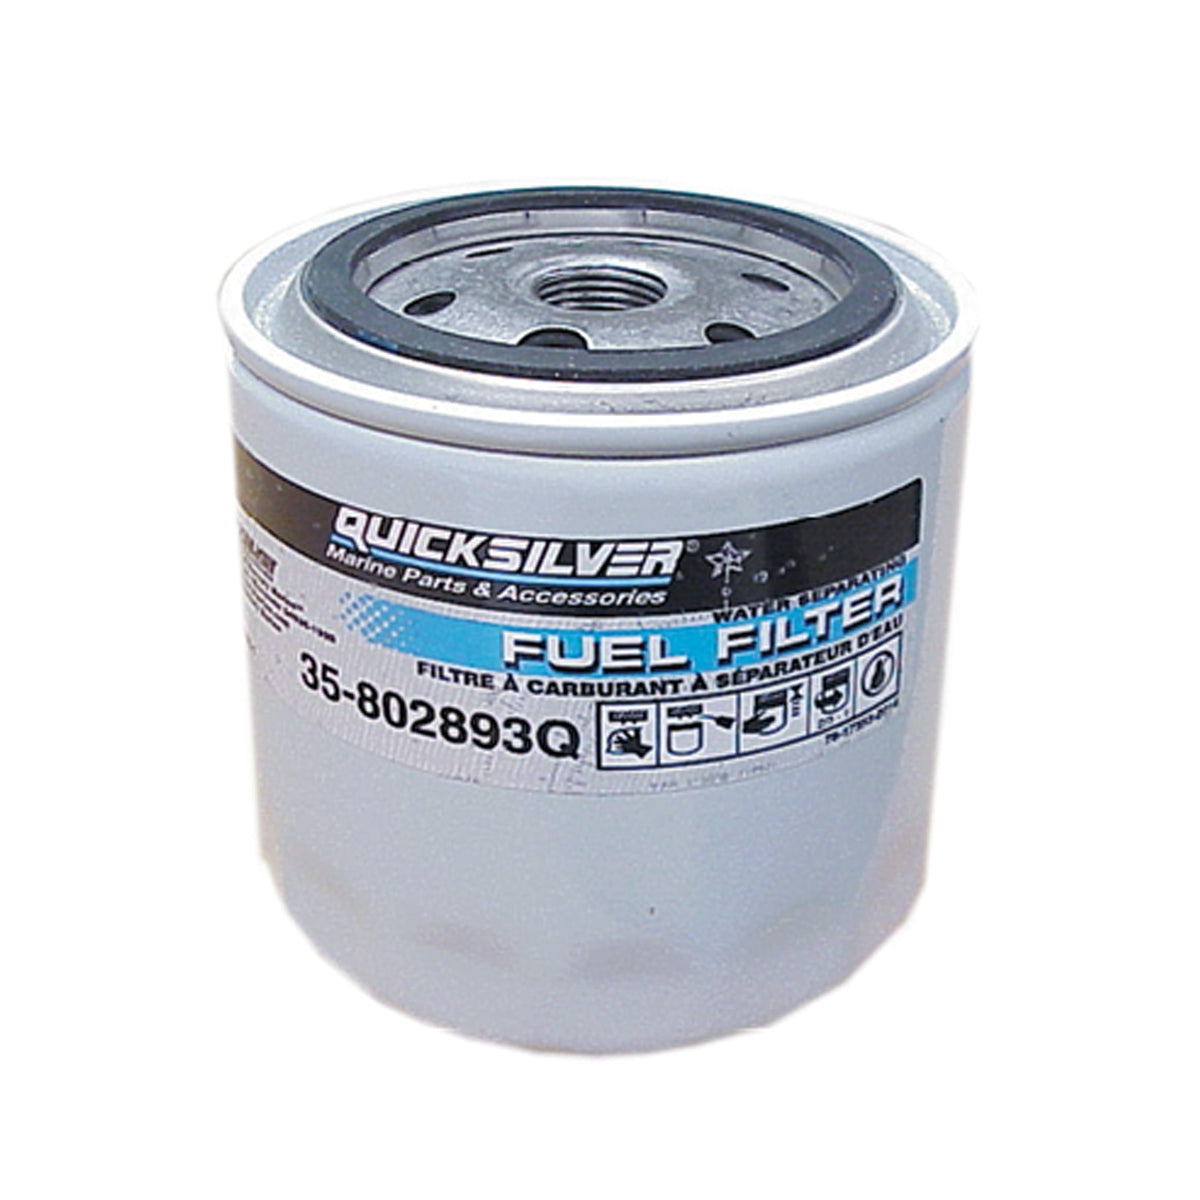 Quicksilver Water Separating Fuel Filter - 35-802893Q01